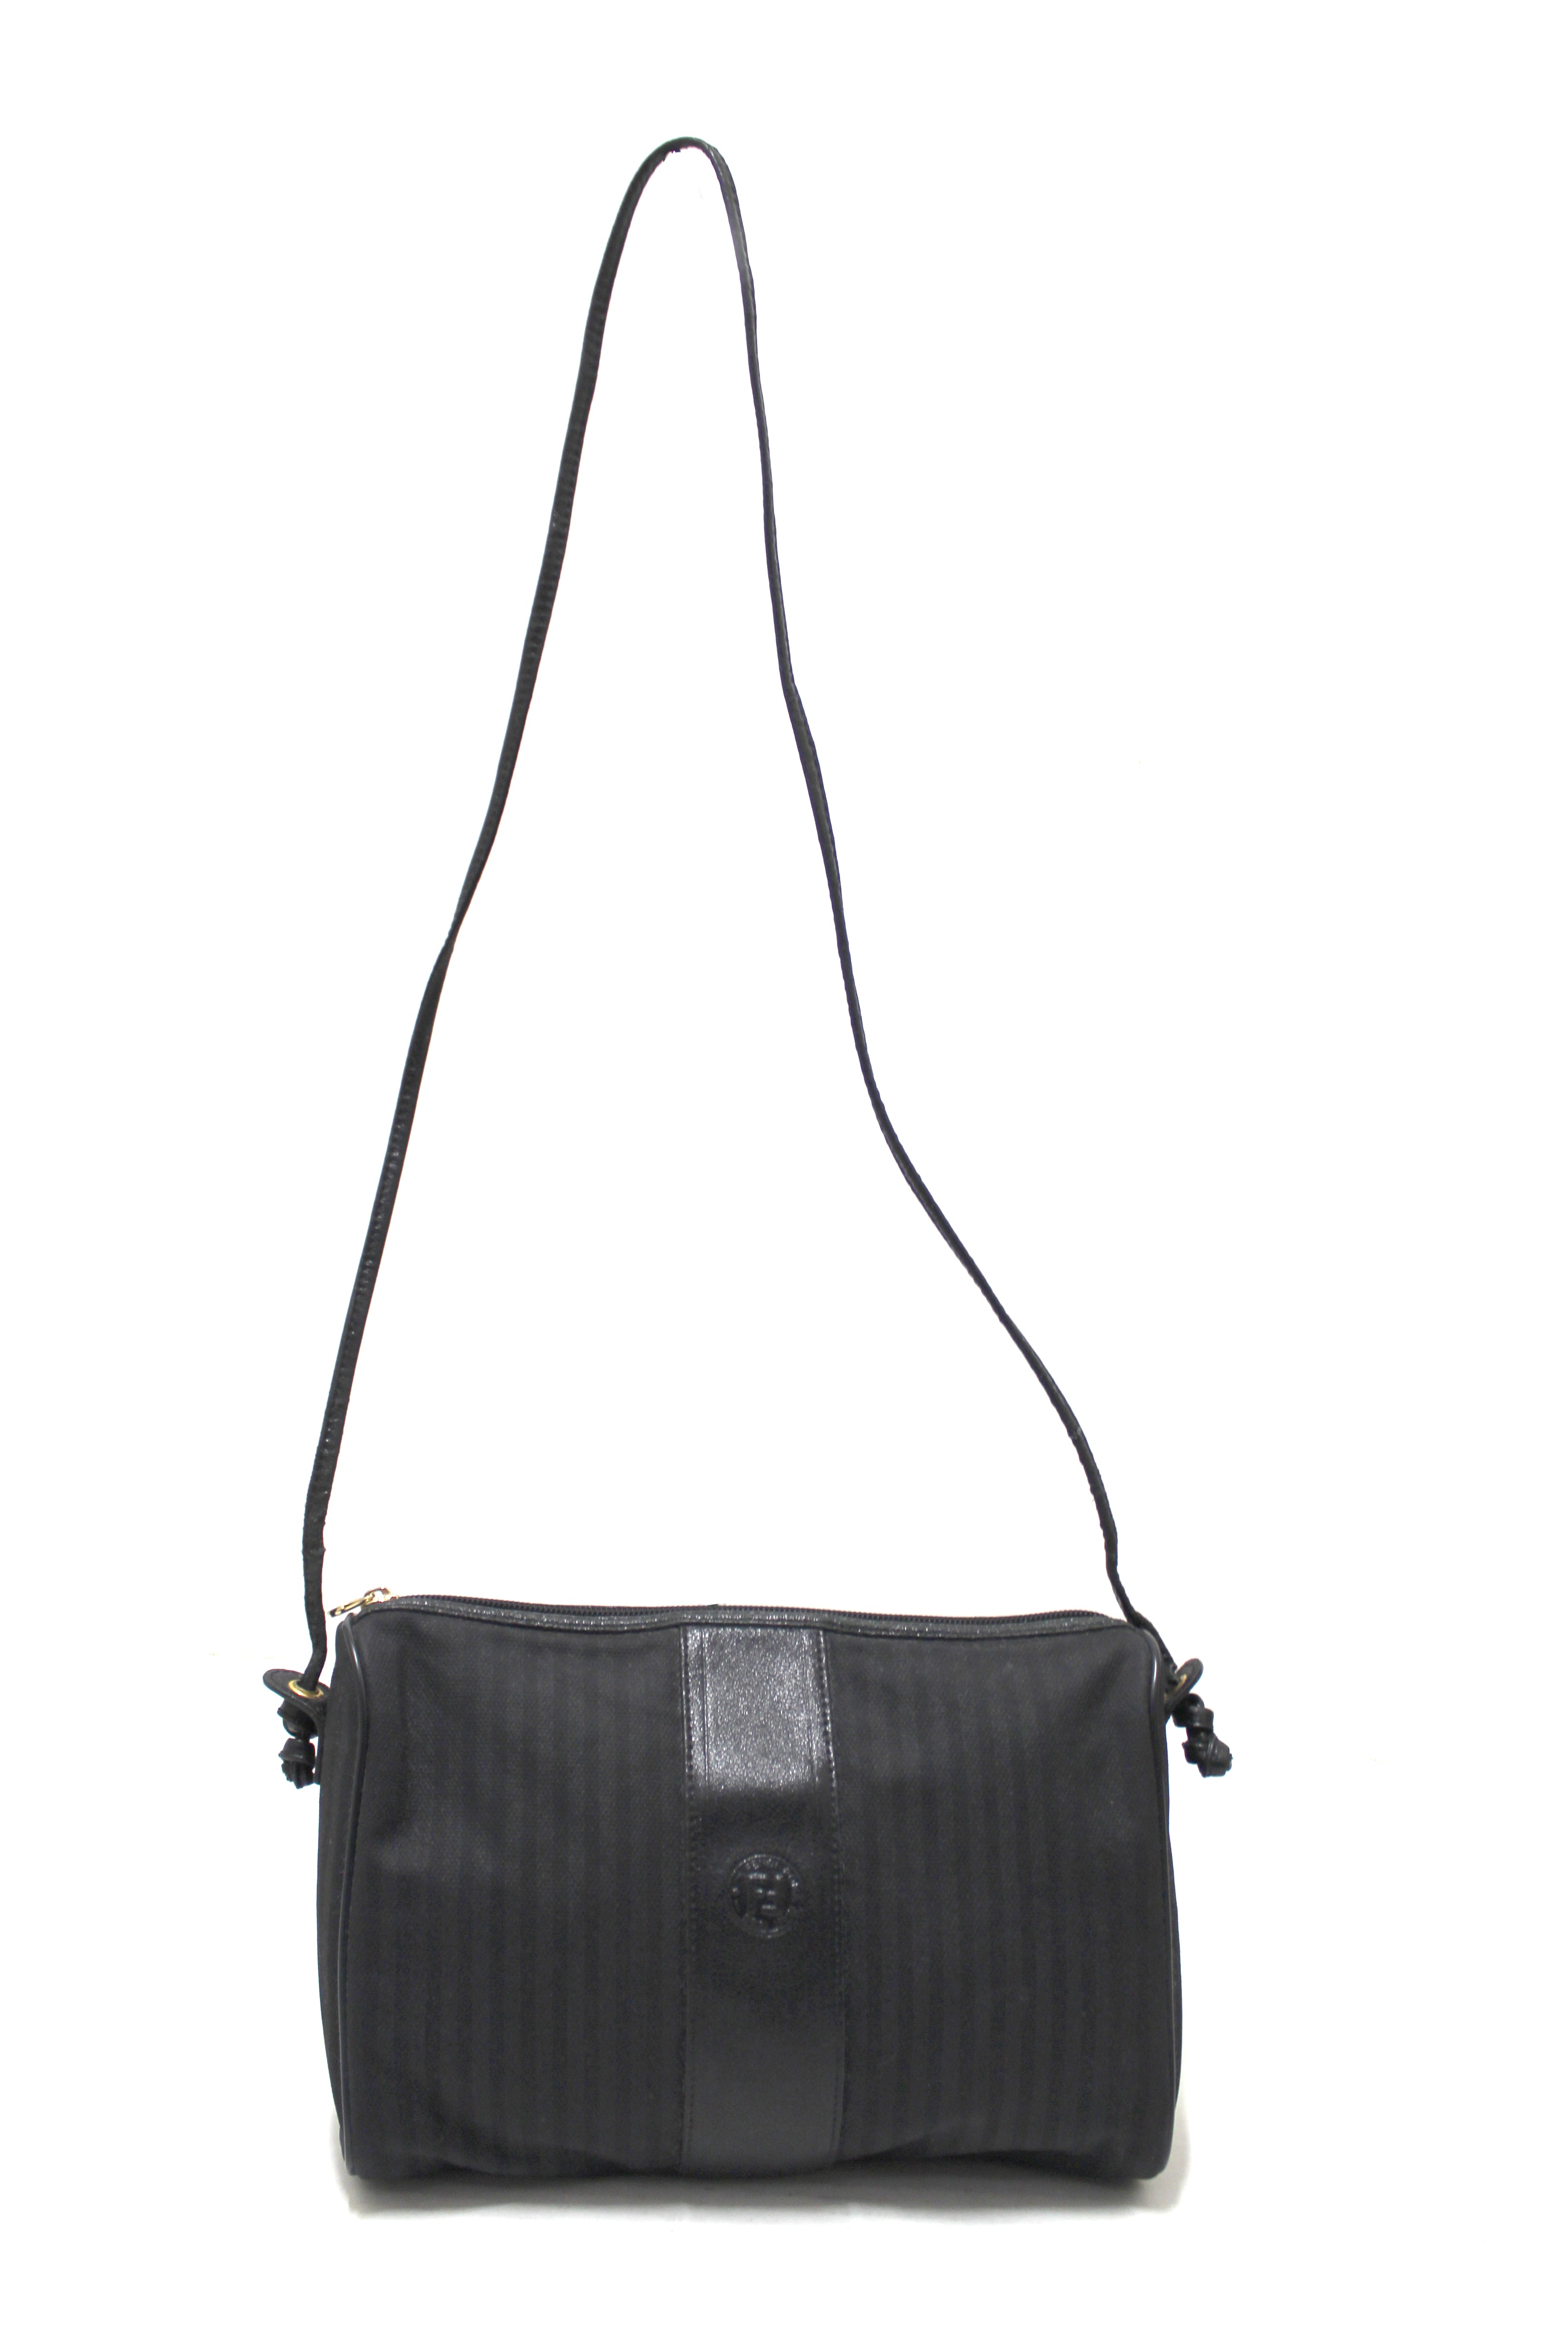 Authentic Fendi Vintage Black Canvas Striped Messenger Crossbody Bag